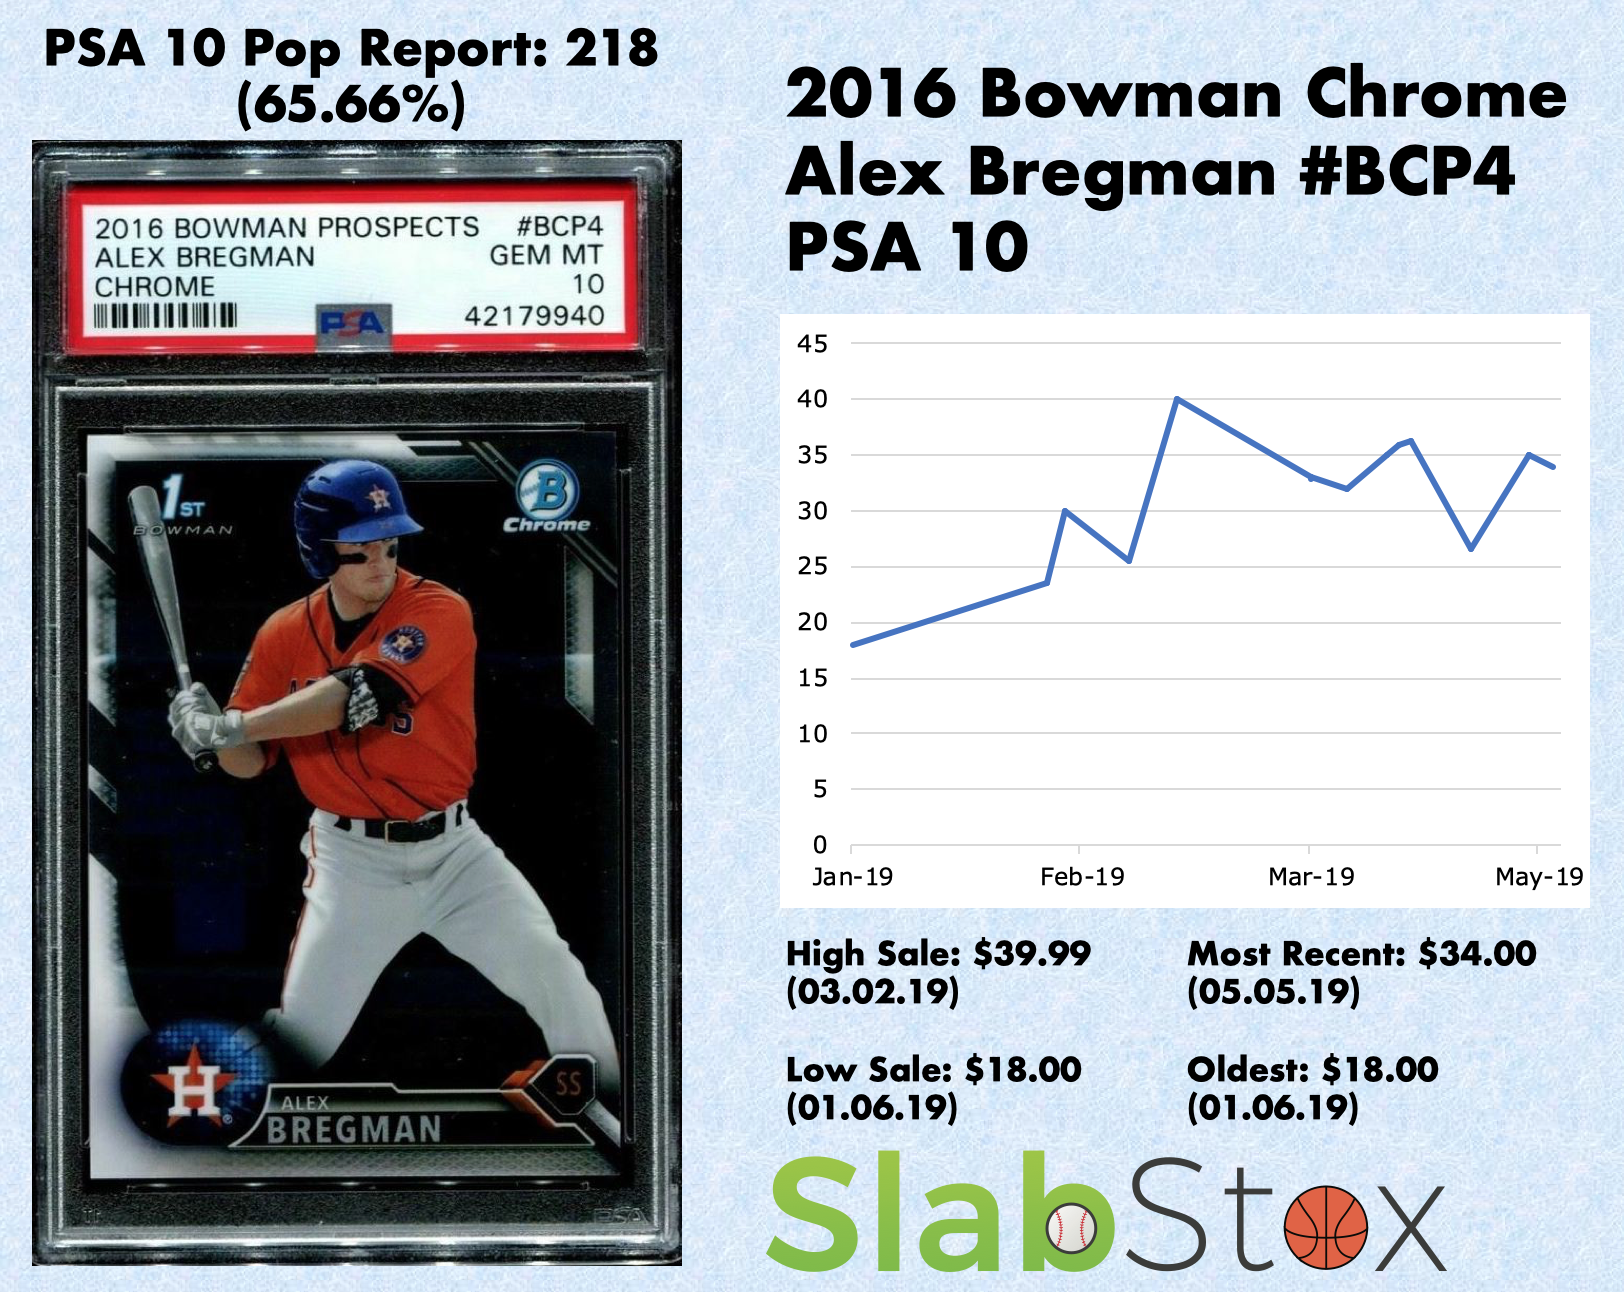 SlabStox infographic for 2016 Bowman Chrome Alex Bregman #BCP4 PSA 10 sports trading card